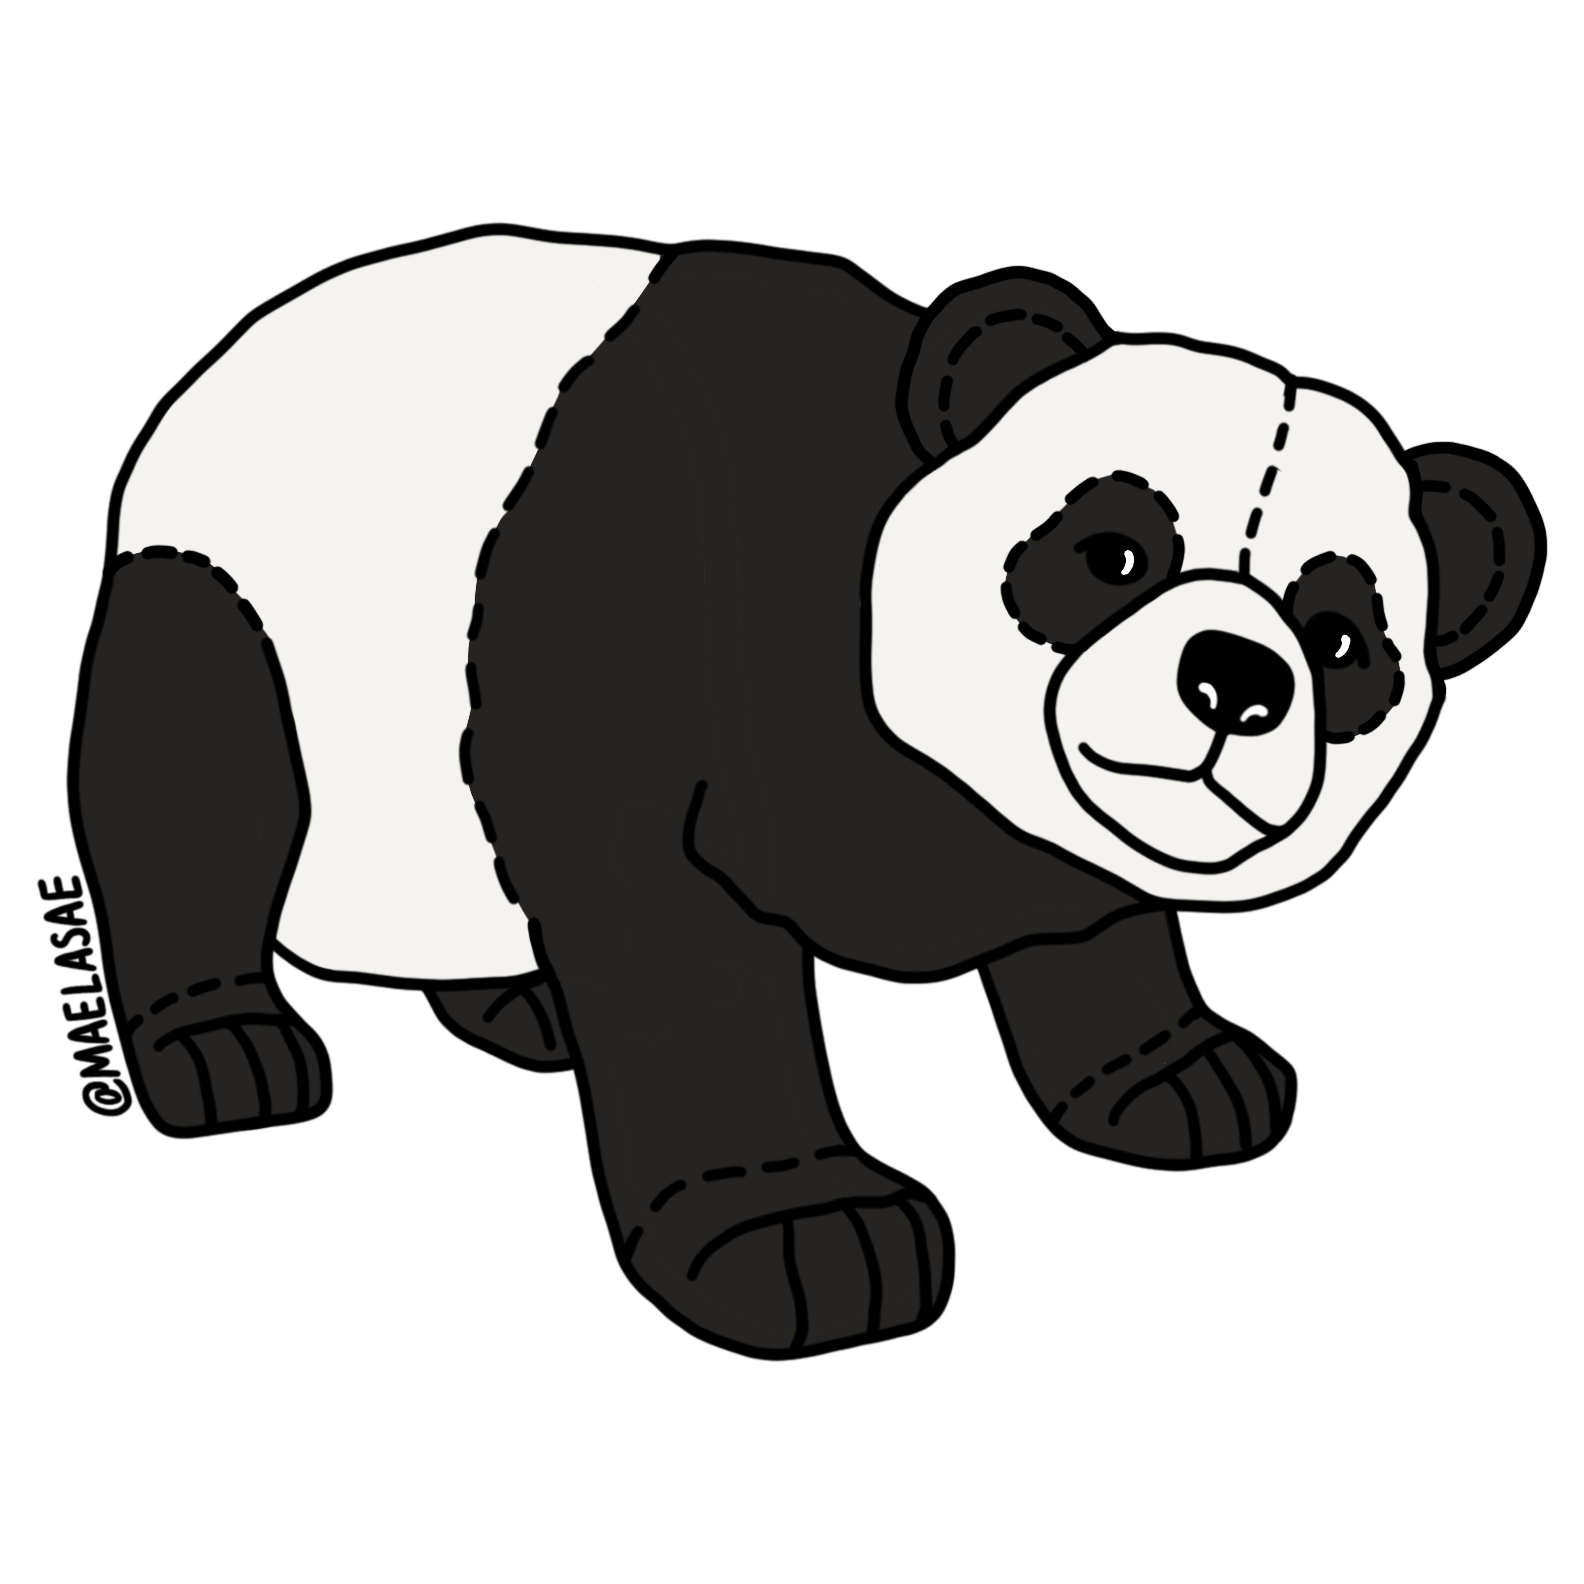 Panda elegante Small para colorir by PoccnnIndustriesPT on DeviantArt